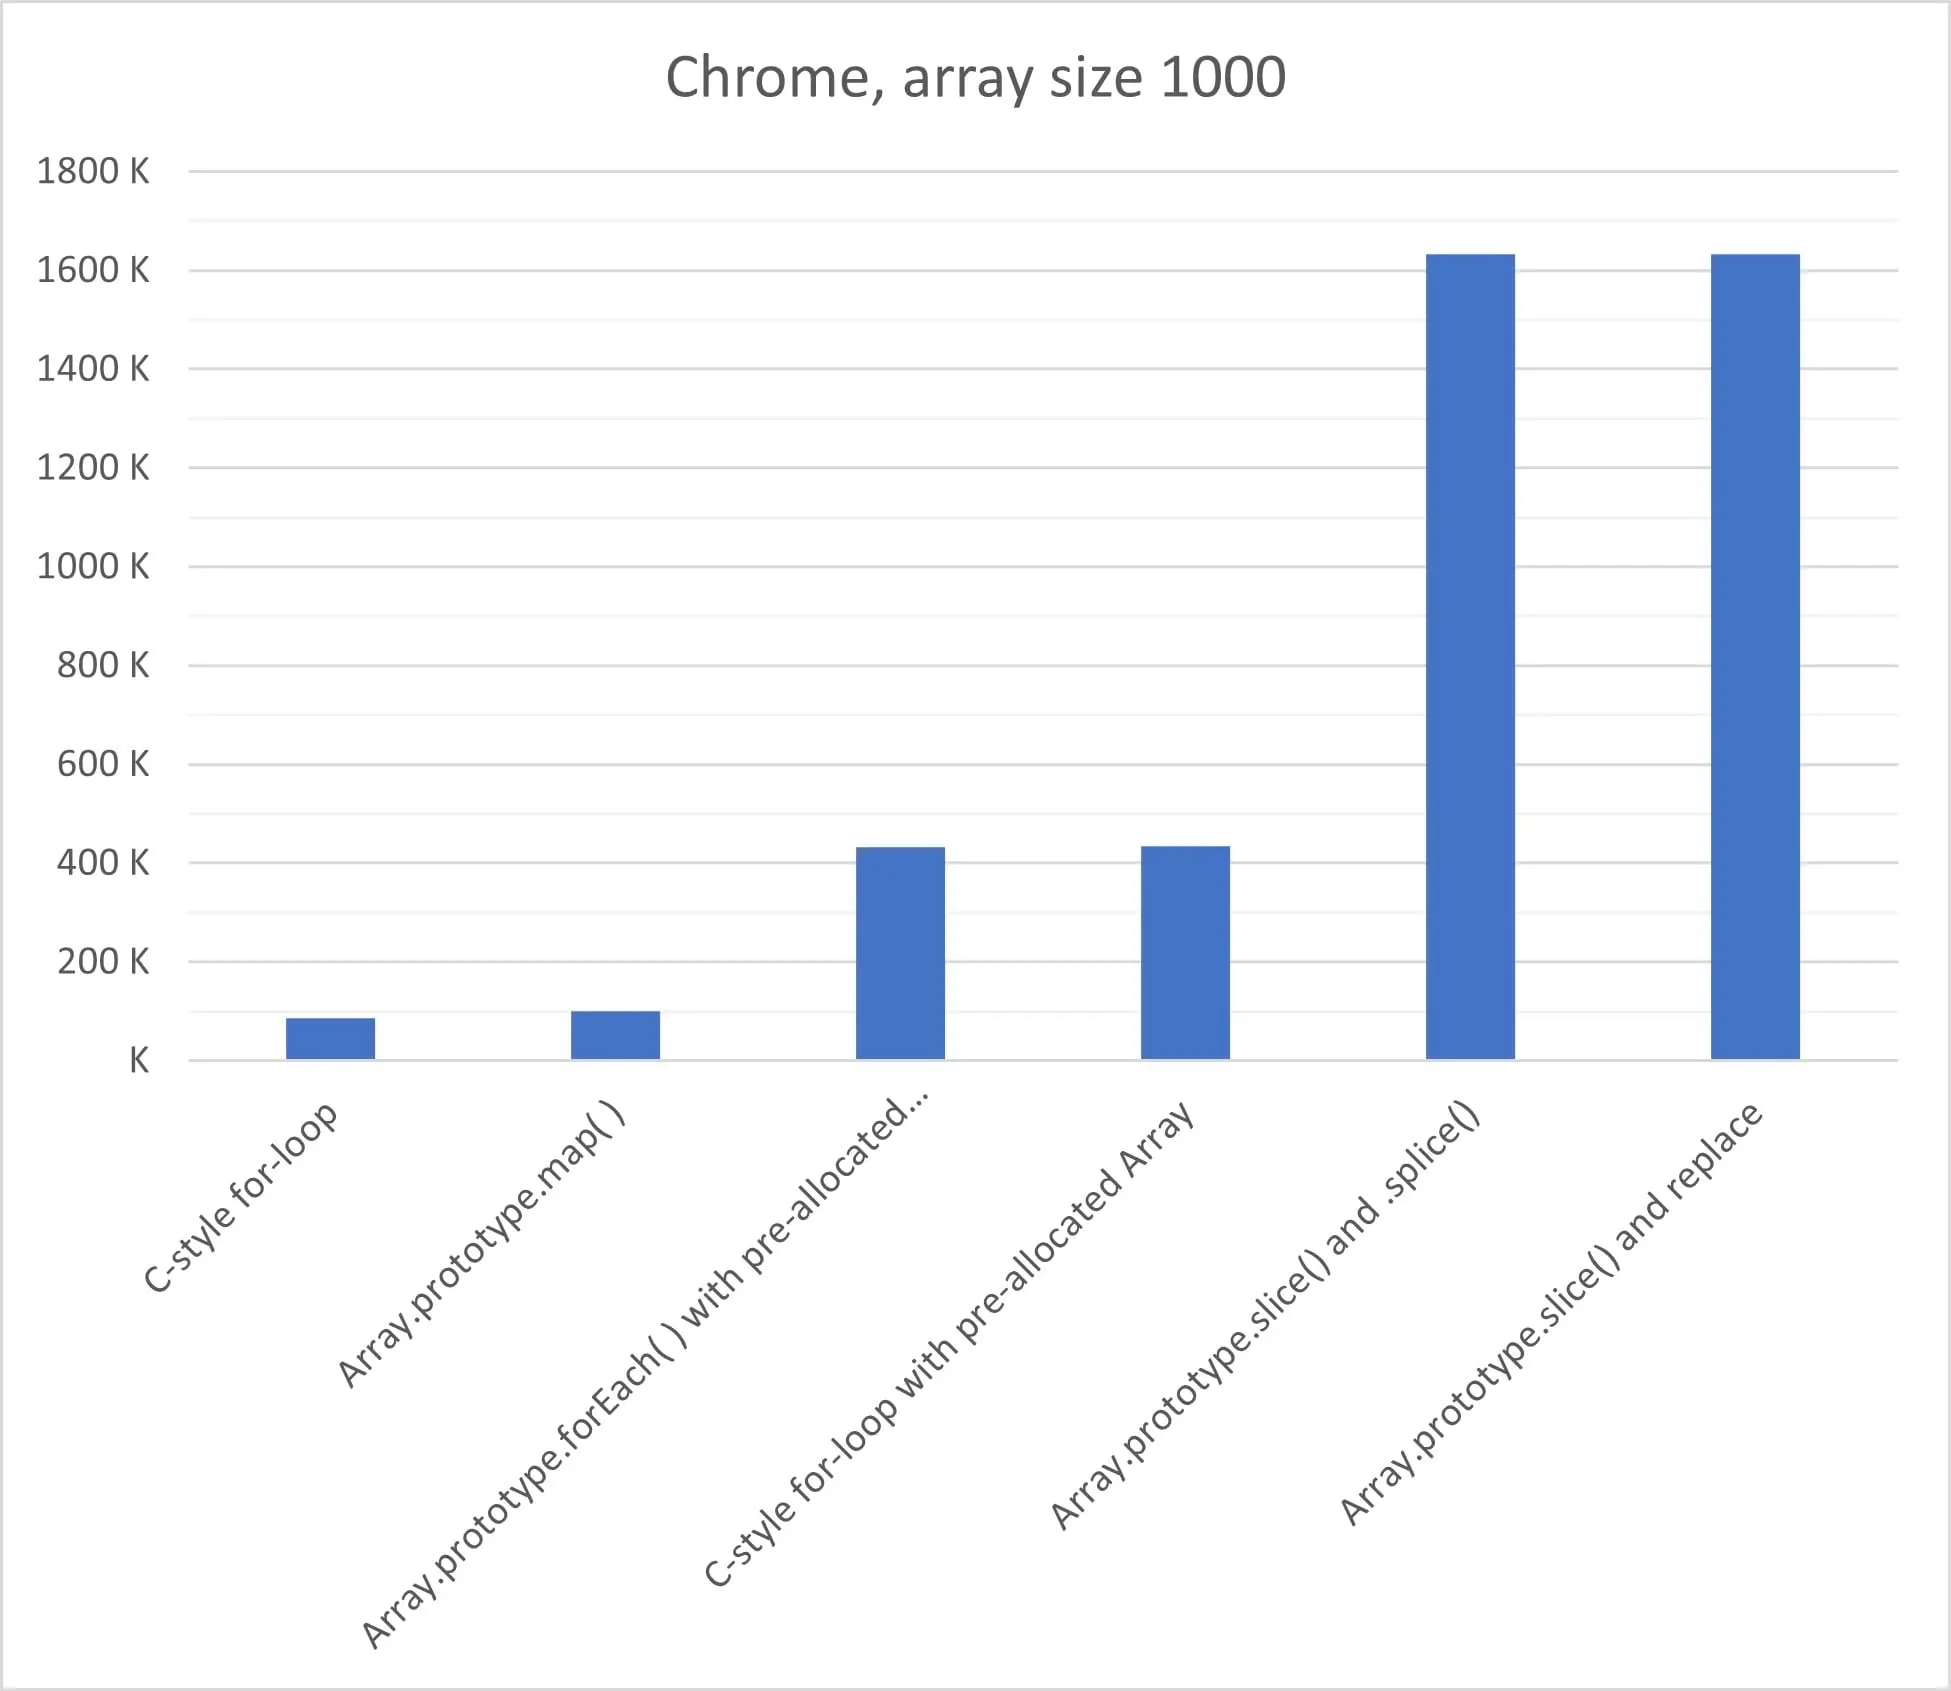 Chrome benchmark at array size 1000